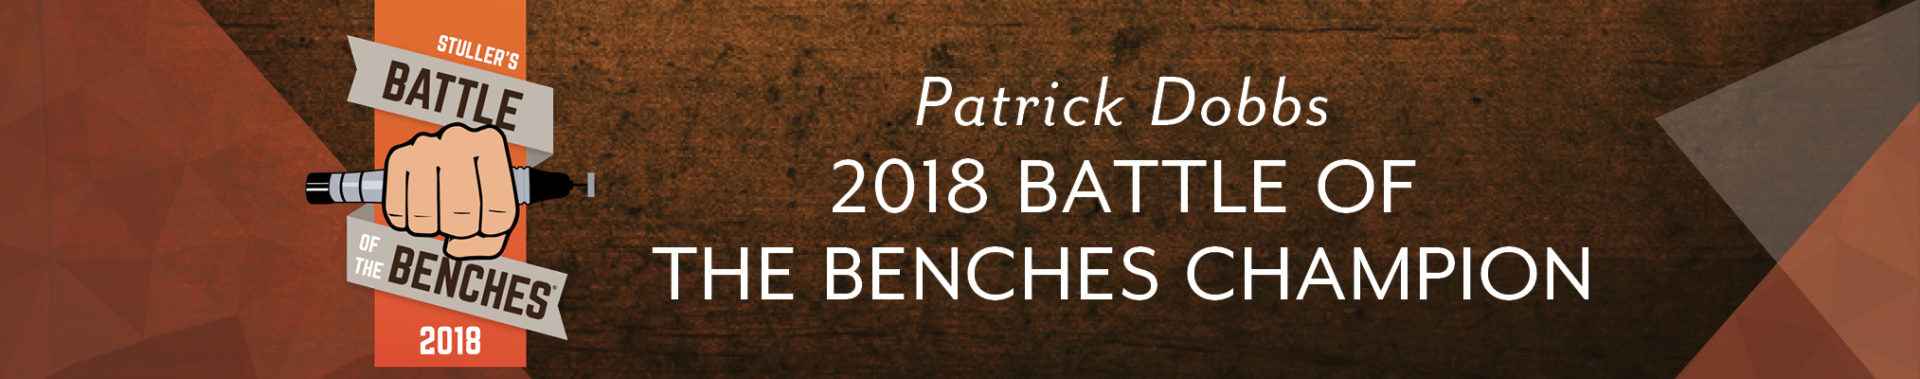 2018 Battle of the Benches Patrick Dobbs Blog Header